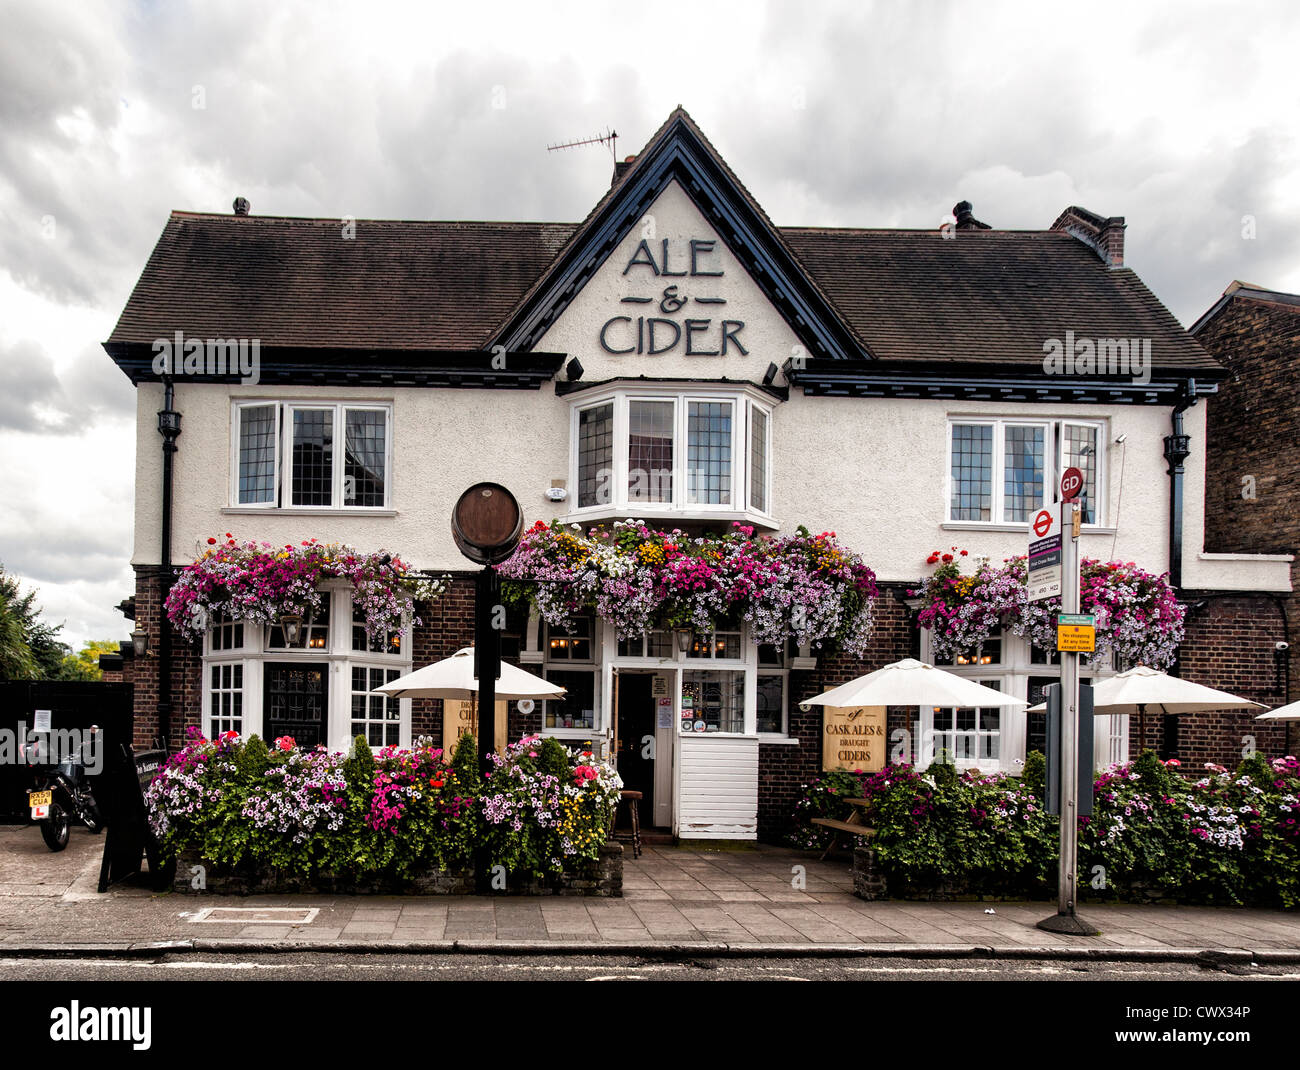 The Sussex Arms - a pub near Twickenham Green Stock Photo